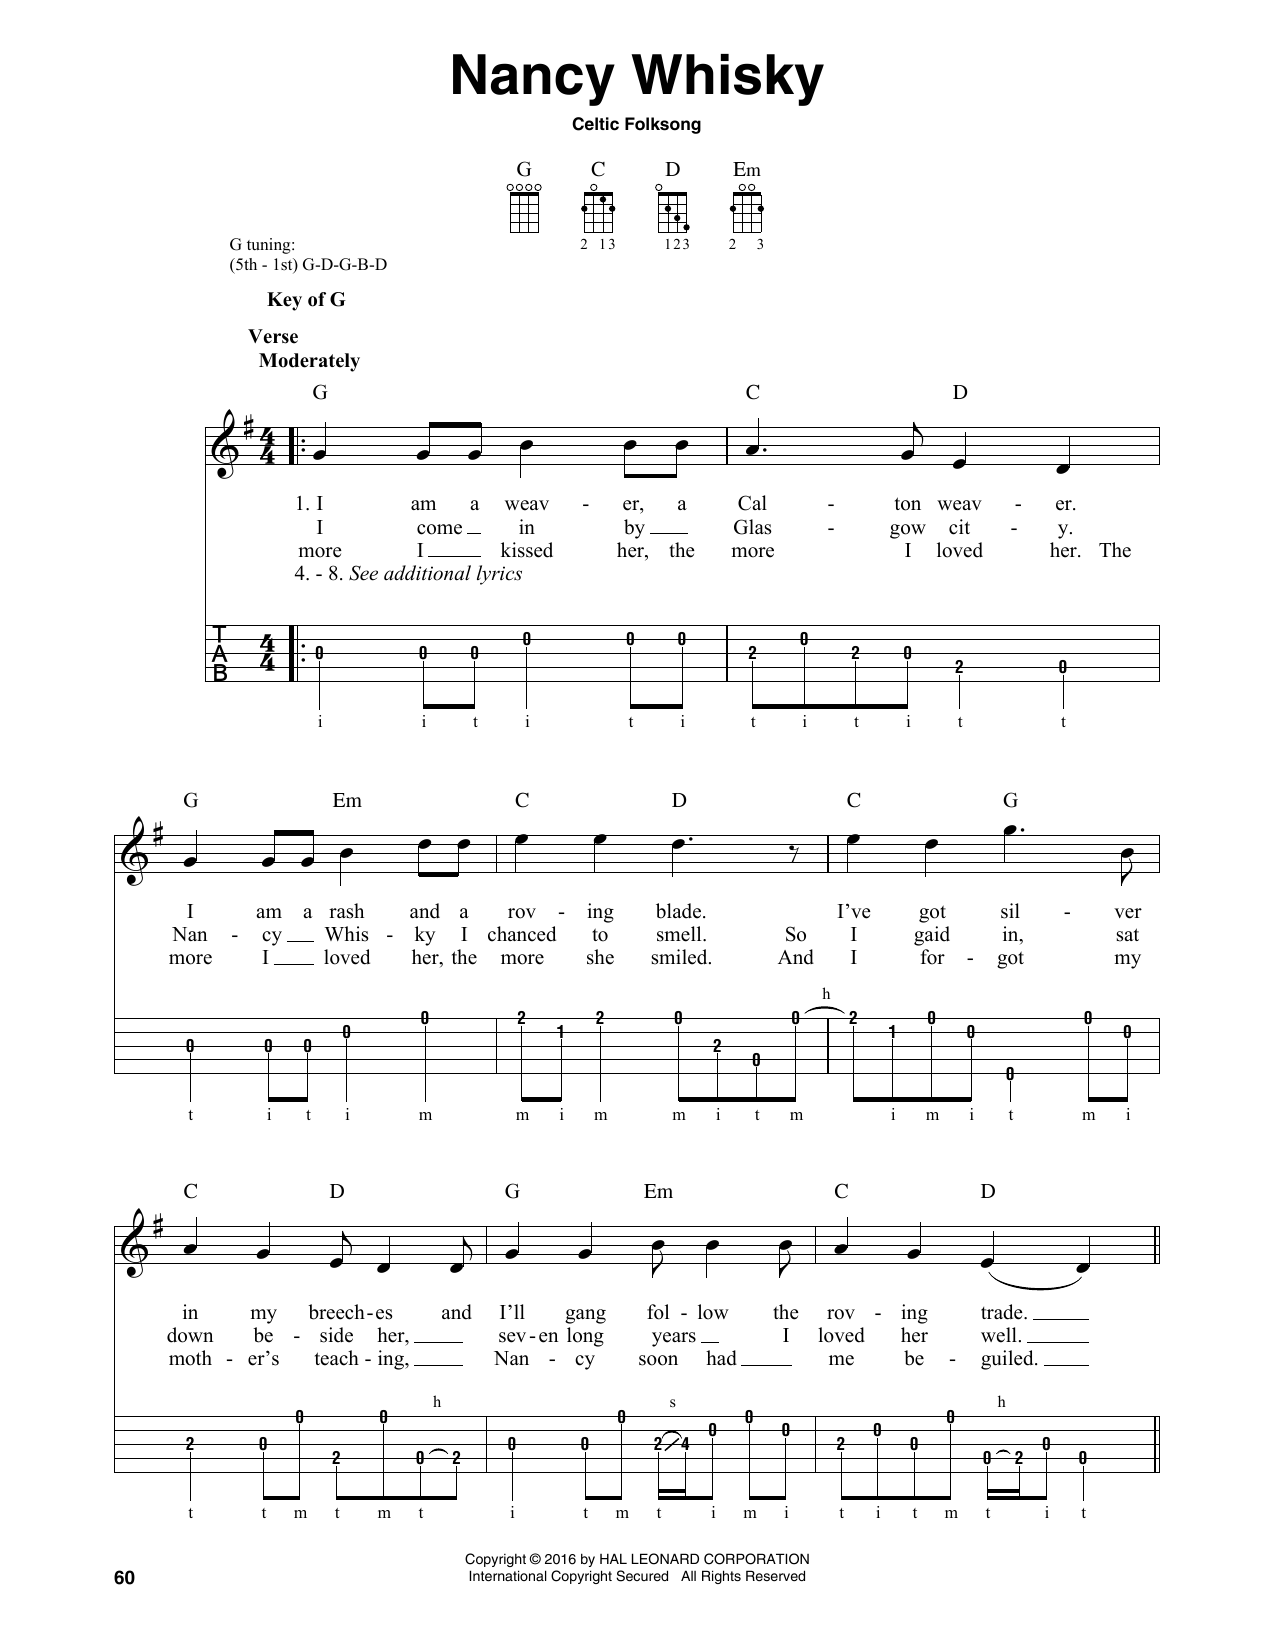 Celtic Folksong Nancy Whisky Sheet Music Notes & Chords for Banjo - Download or Print PDF